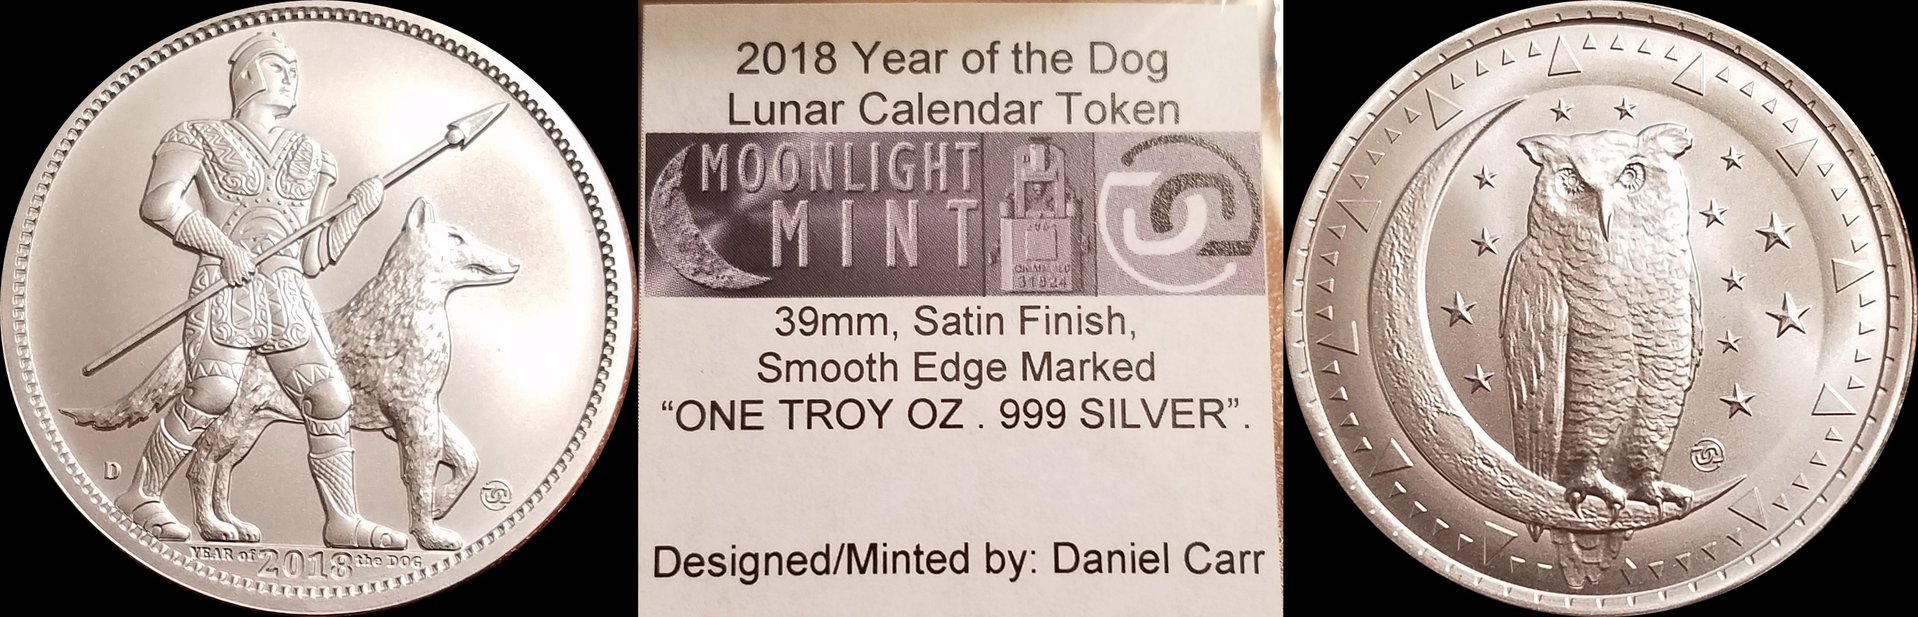 2018 Year of the Dog1-horz.jpg